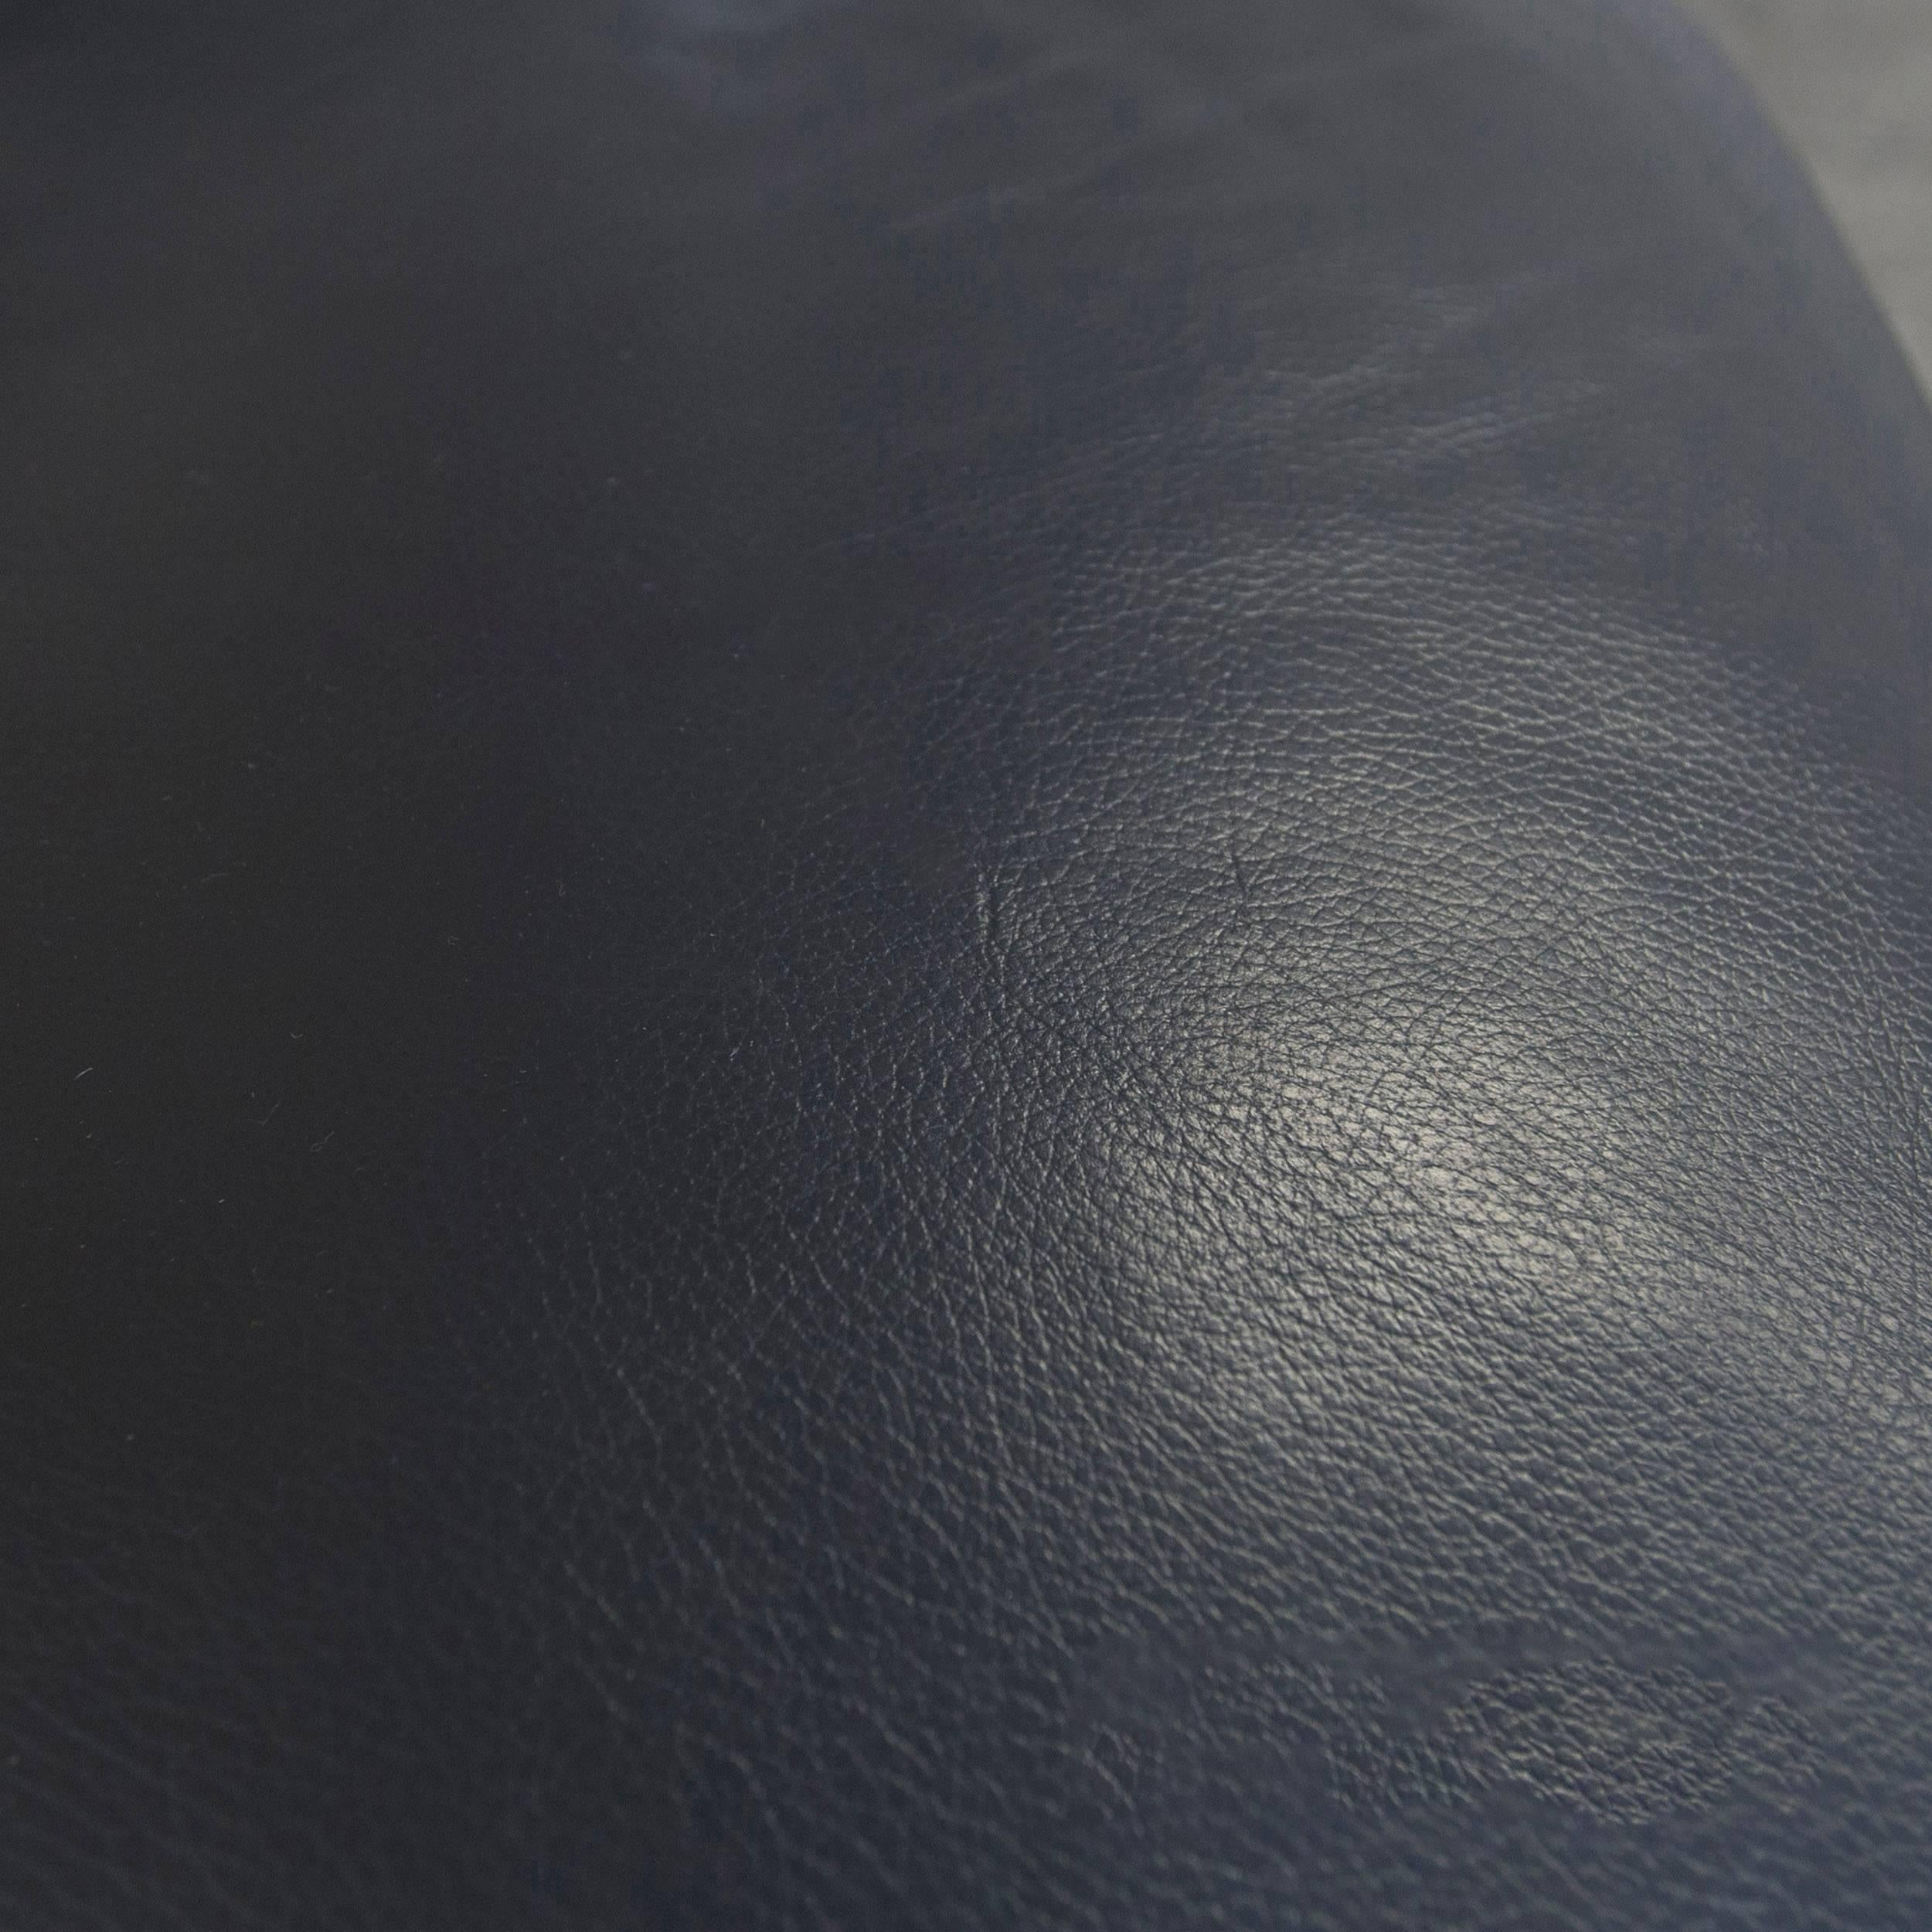 Külkens & Sohn Designer Leather Sofa Black Two-Seat Couch Modern For Sale 1